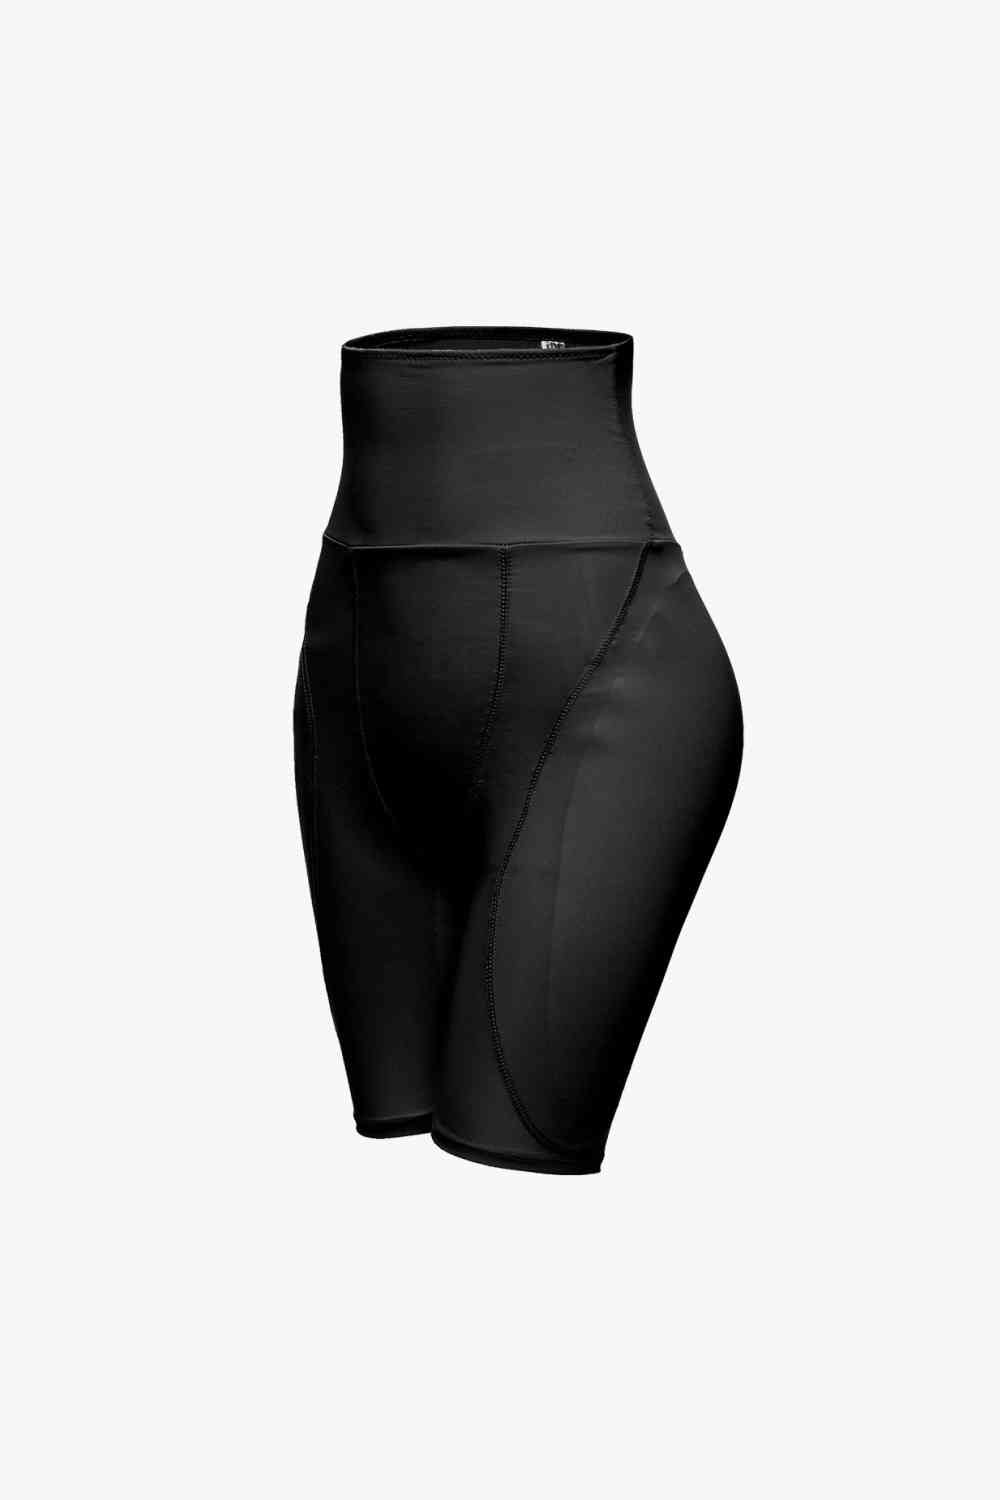 BNWT Conturve 3XL High Waist Shaping Shorts Size 20-22 Black RRP